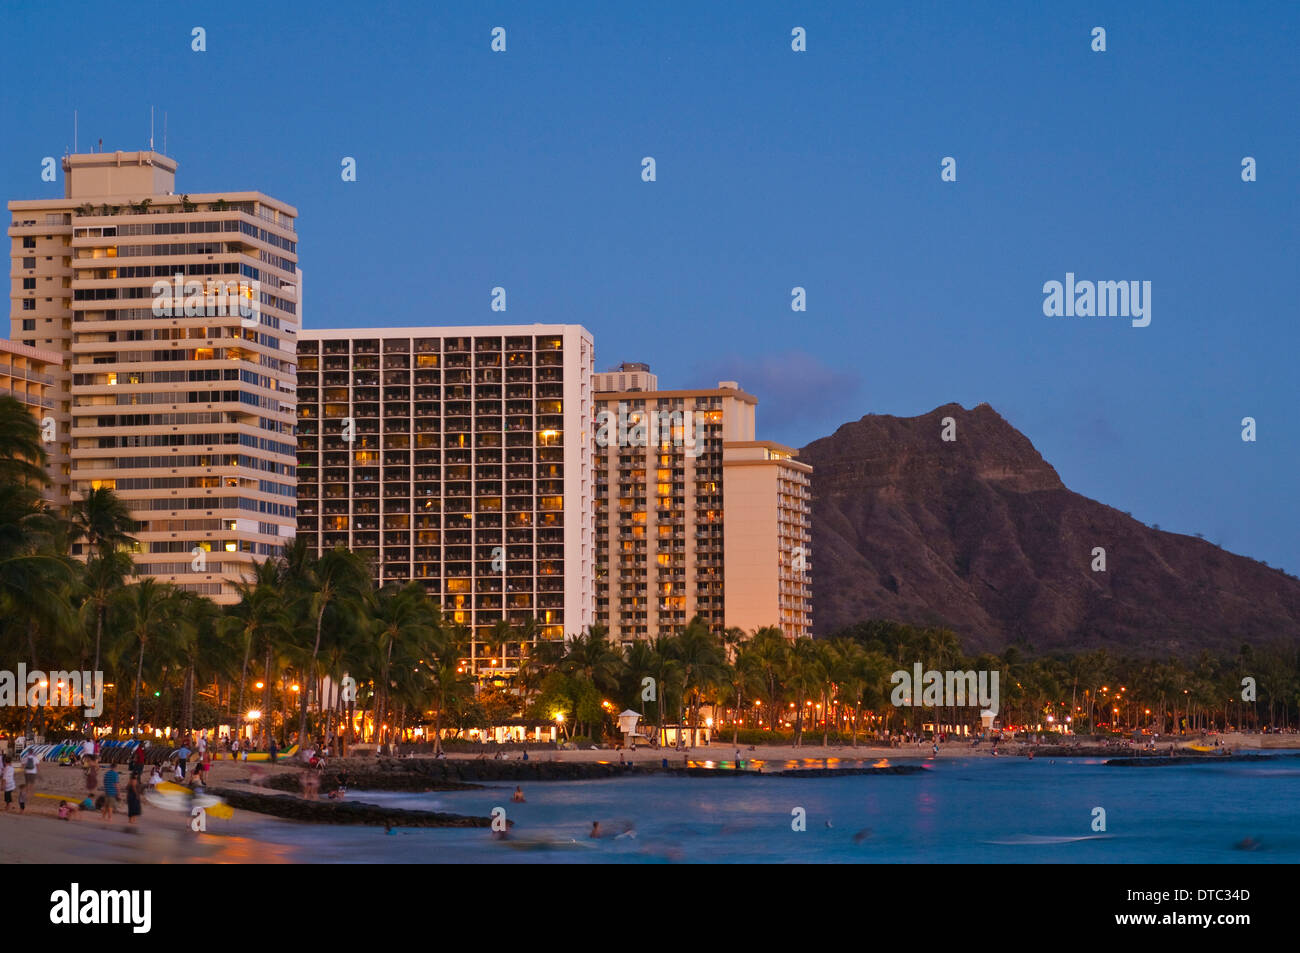 Luce della Sera su Diamond Head e Spiaggia di Waikiki, Honolulu Oahu, Hawaii Foto Stock